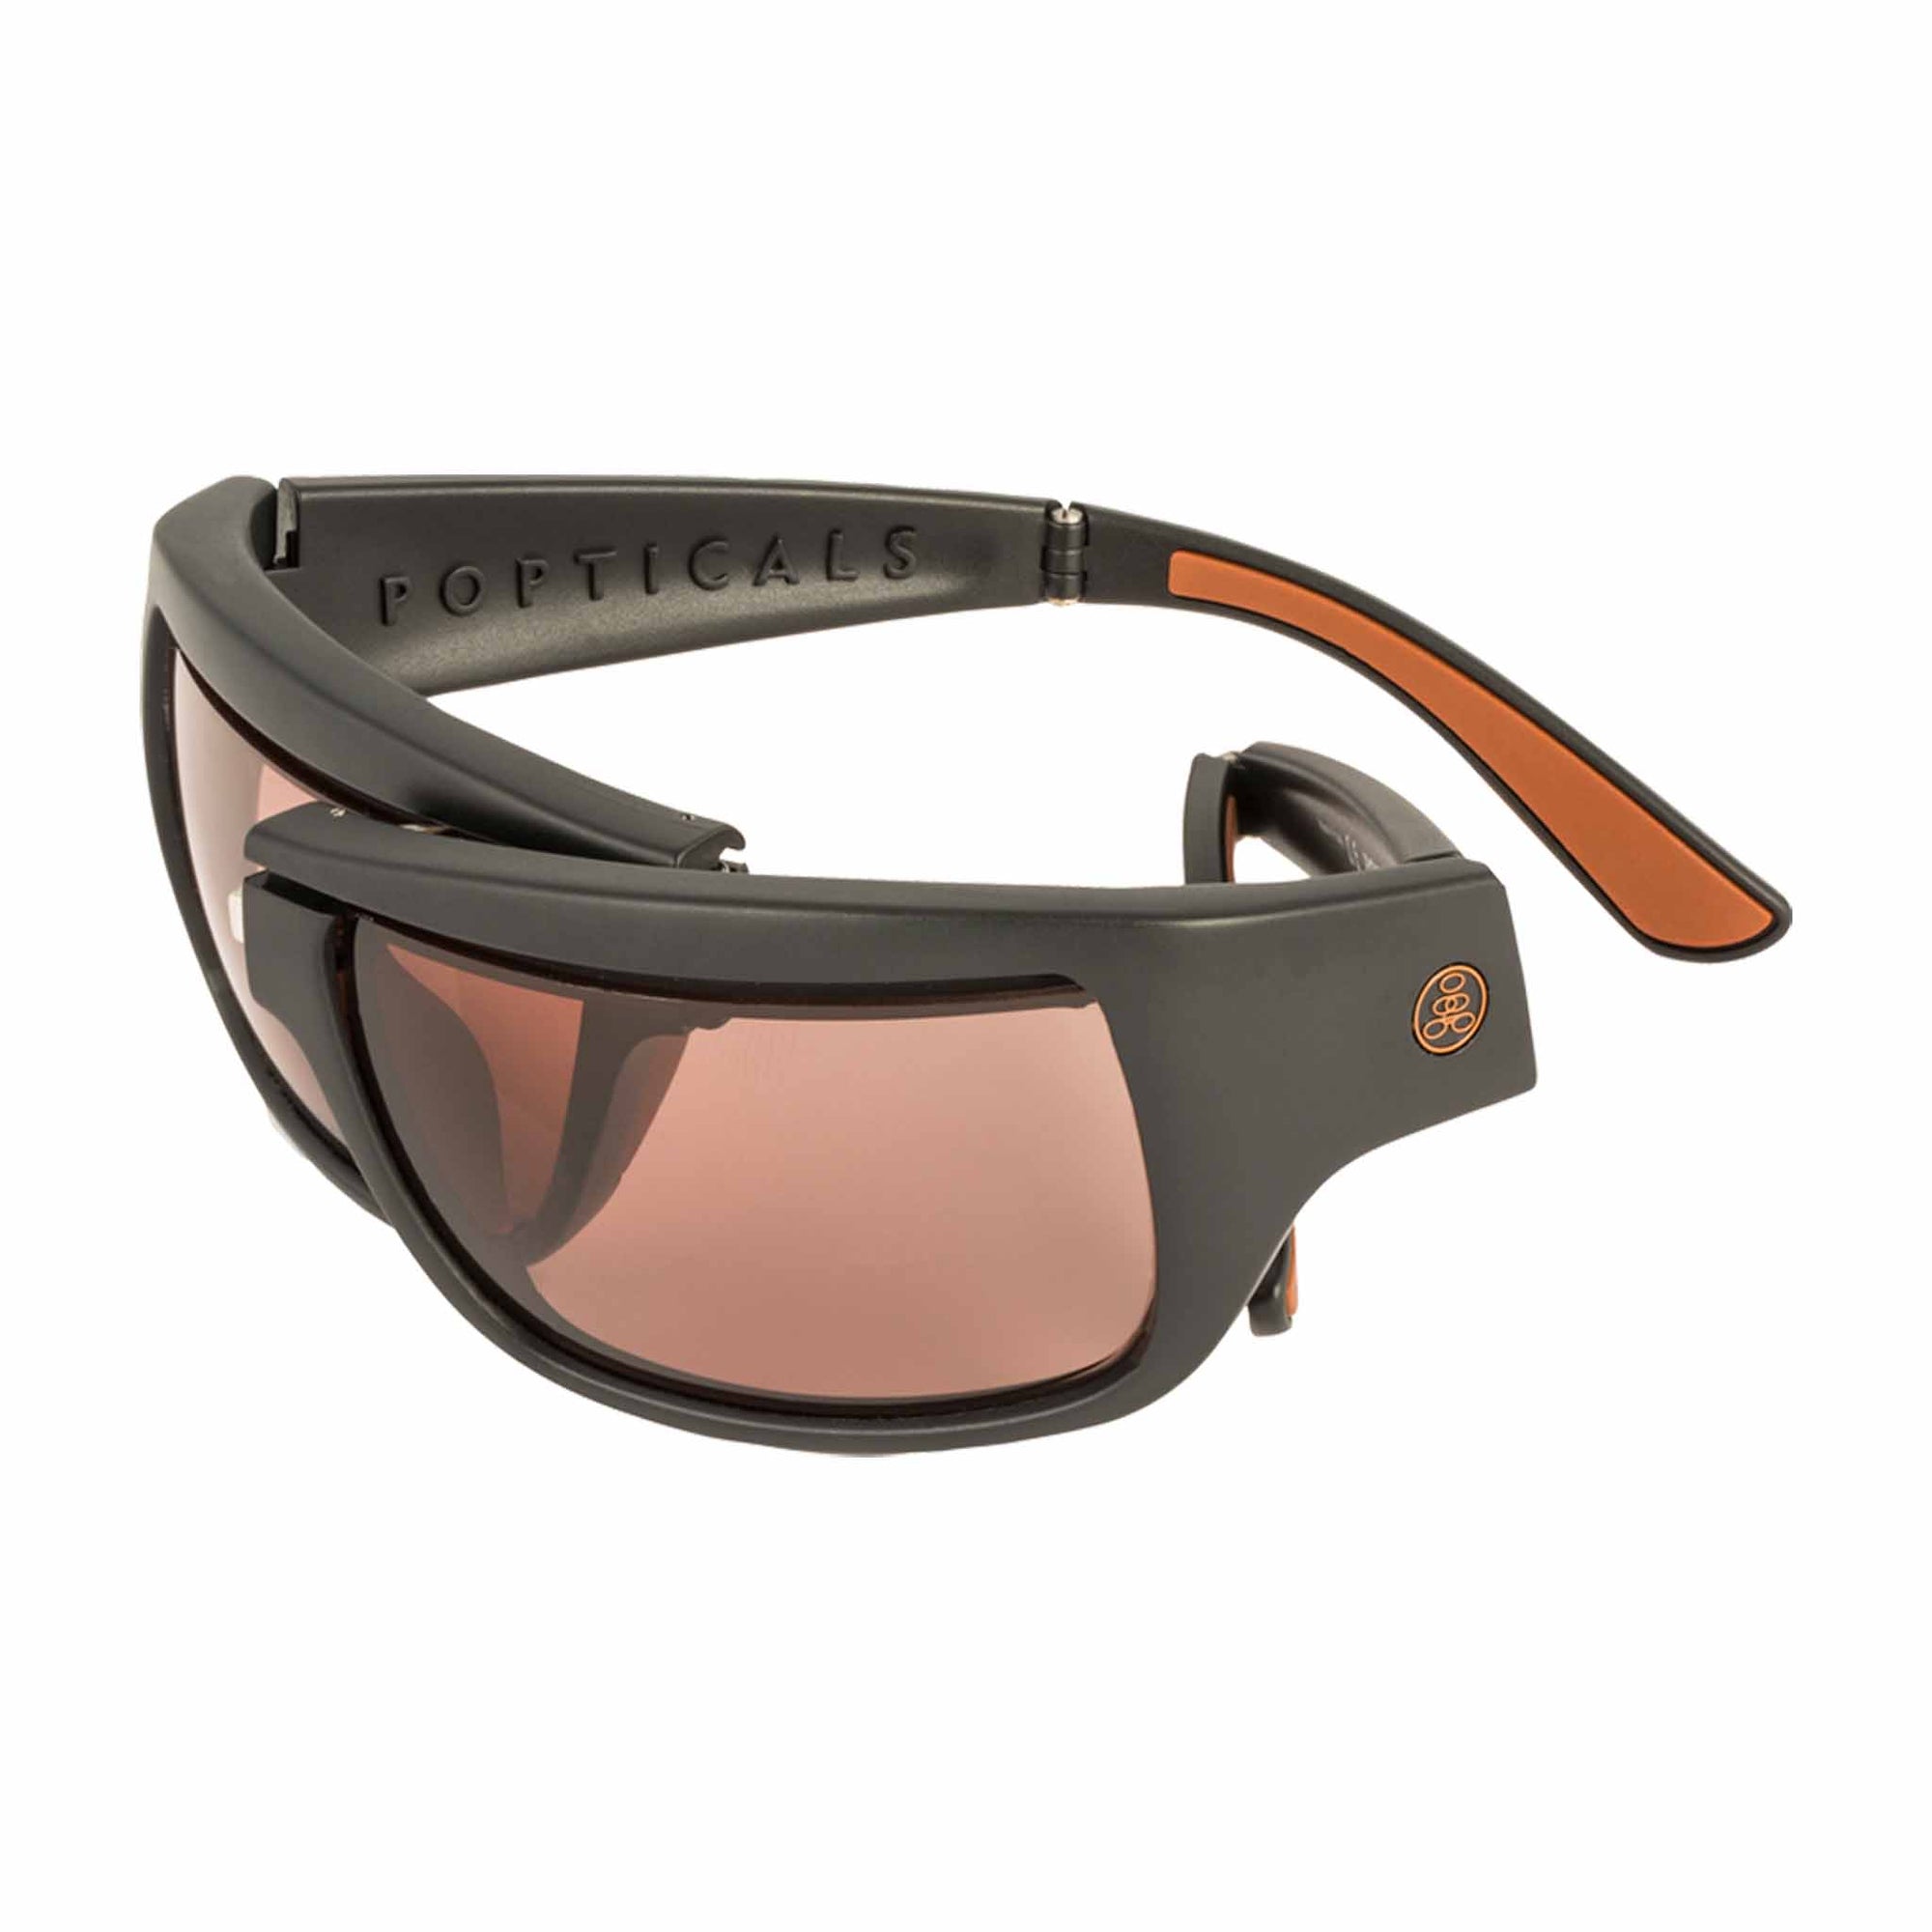 Popticals, Premium Compact Sunglasses, PopH2O, 010070-BMCP, Polarized Sunglasses, Matte Black Frame, Copper Lenses, Glam View